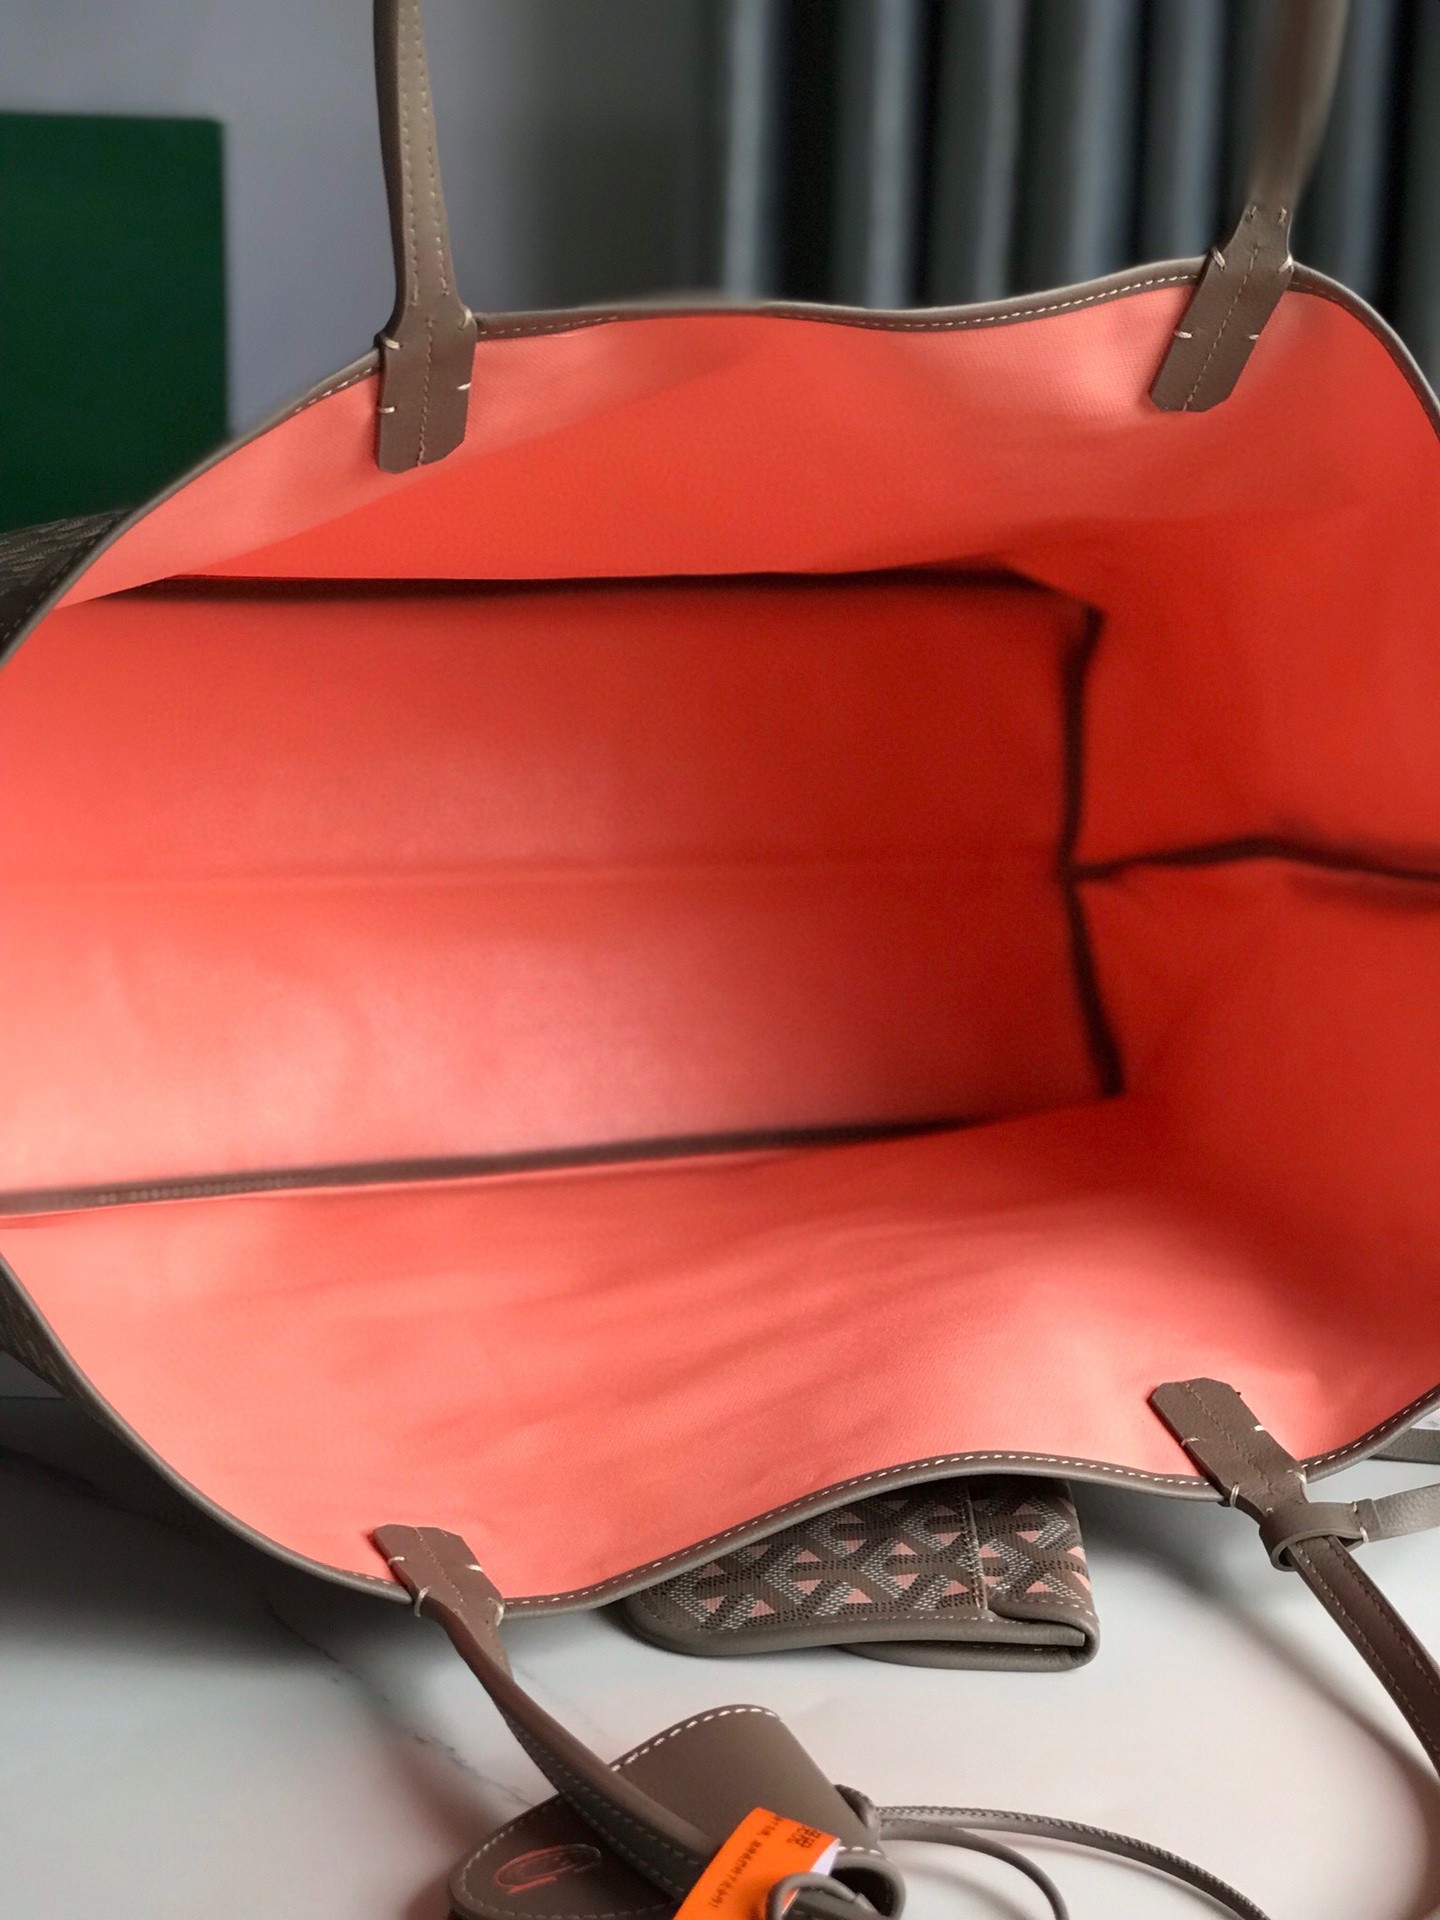 Replica Louis Vuitton - goyardlv bags - Medium